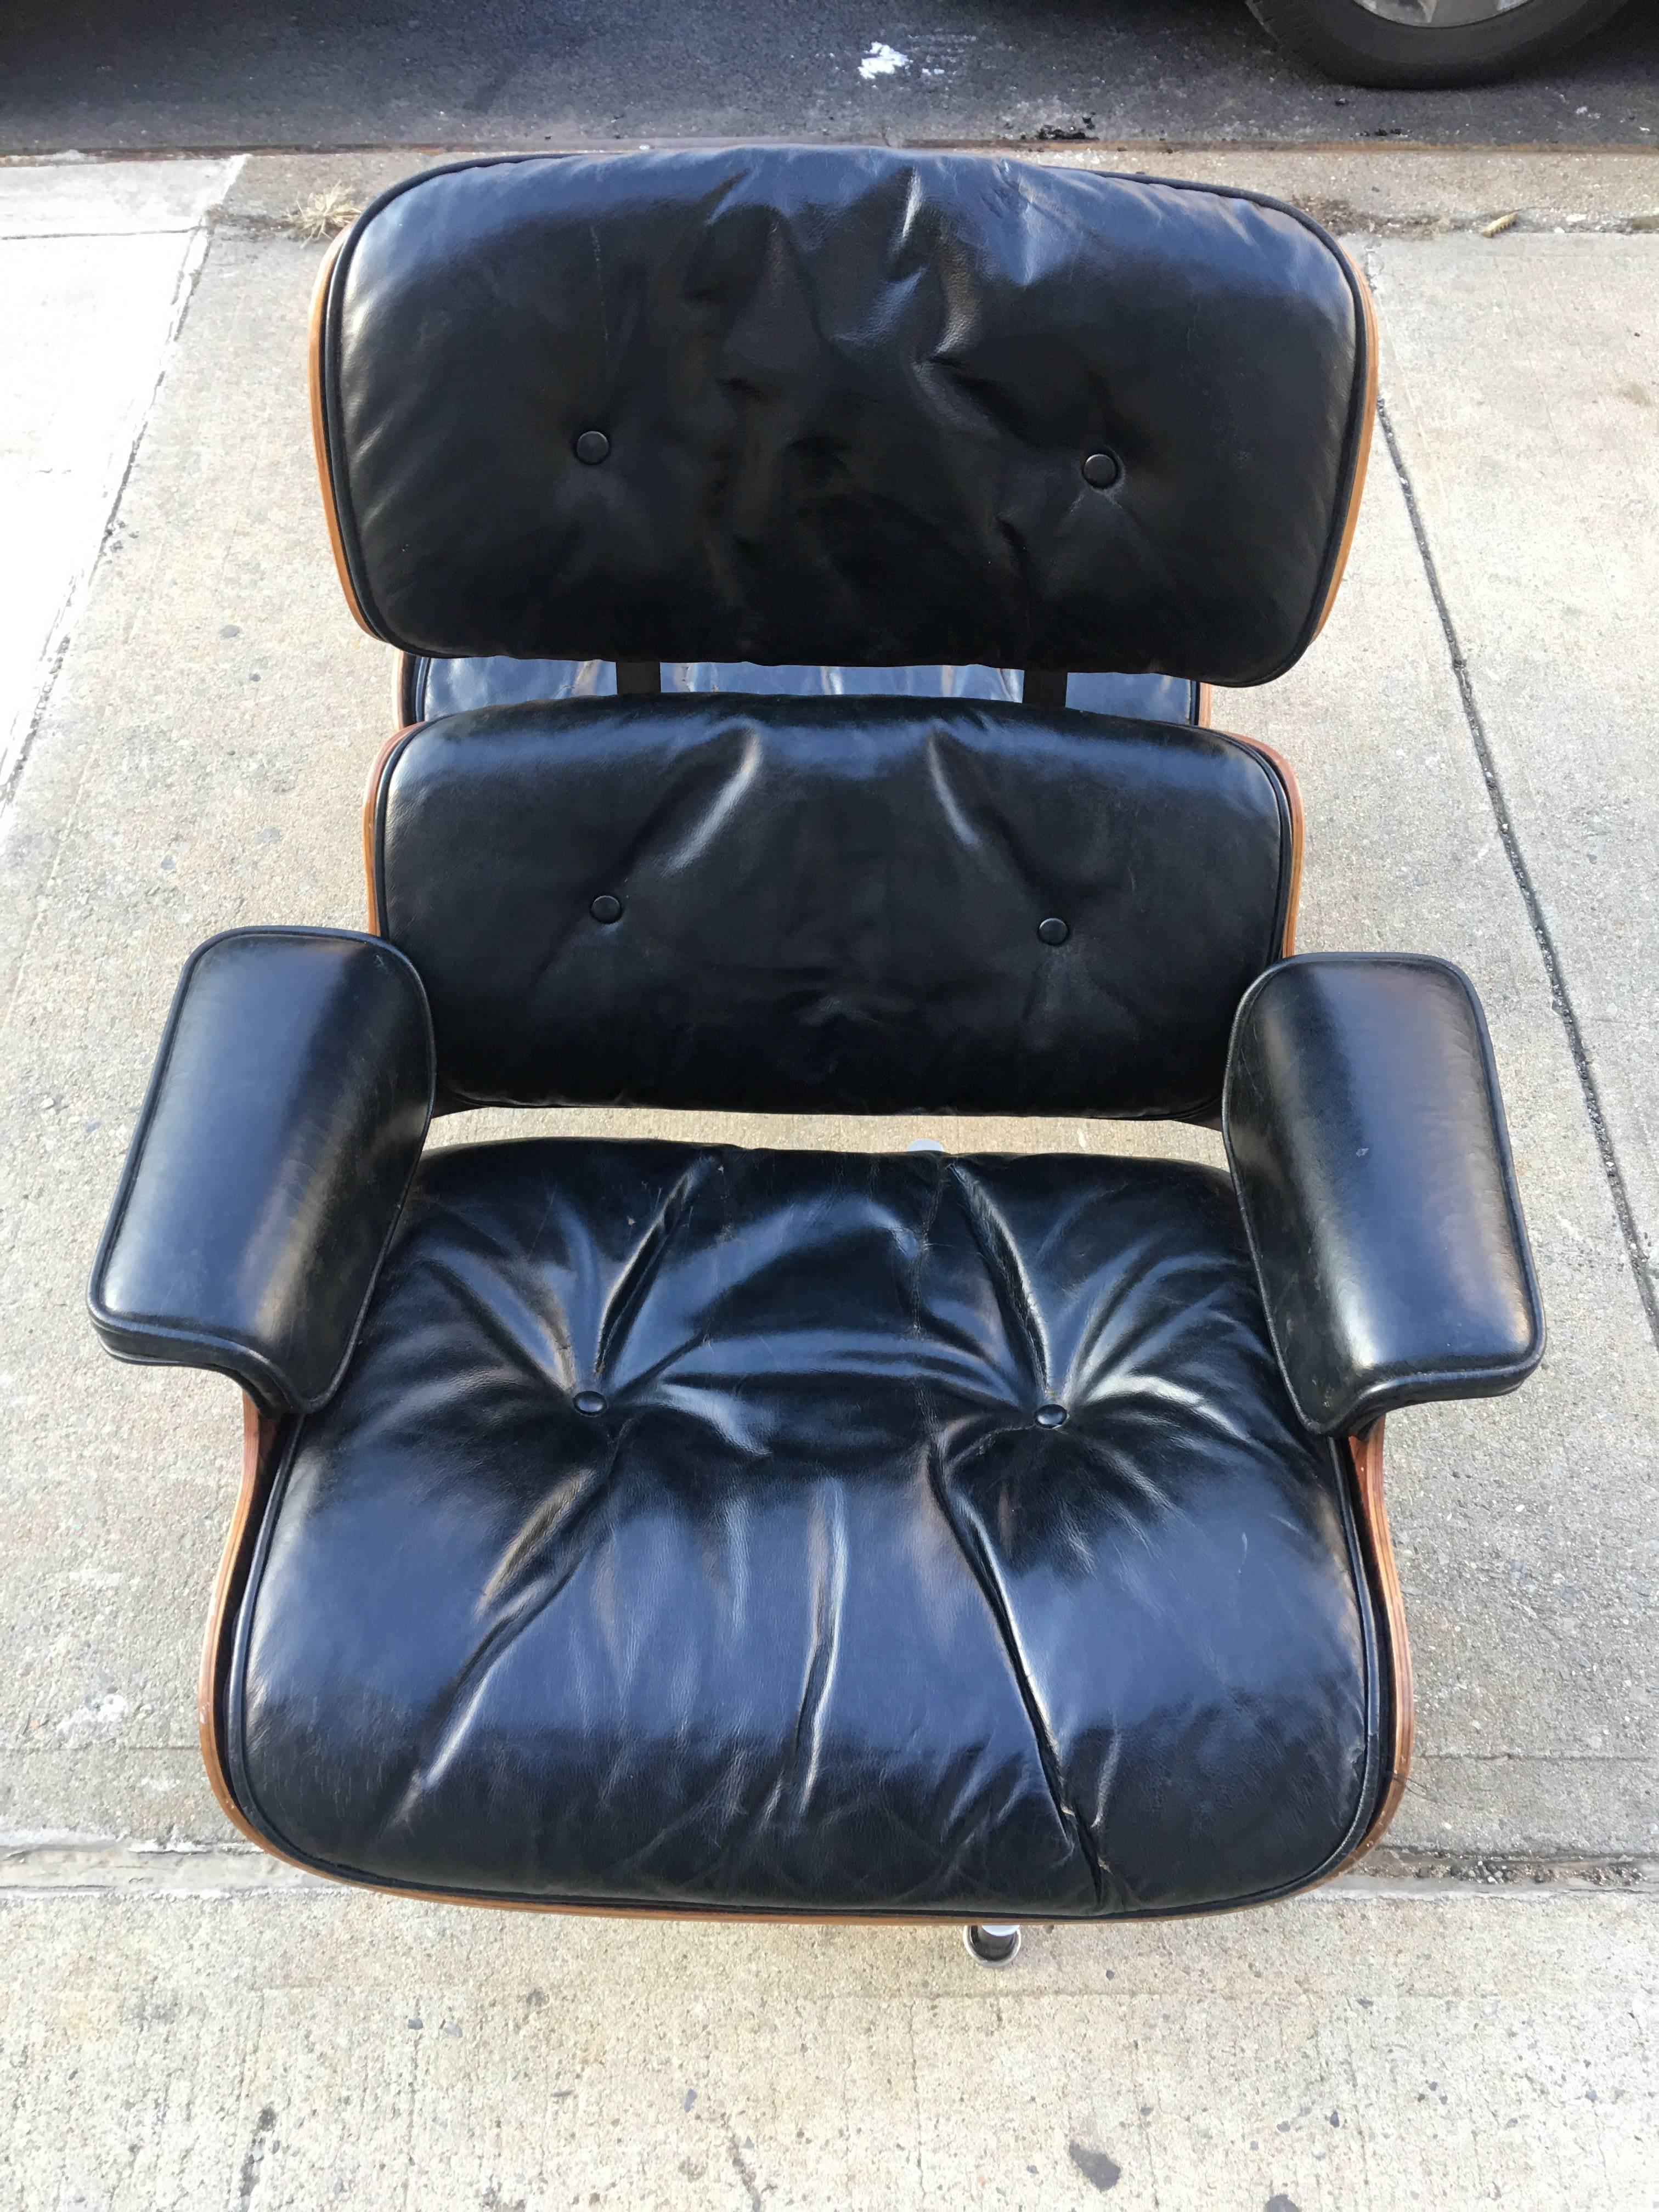 1960 eames lounge chair